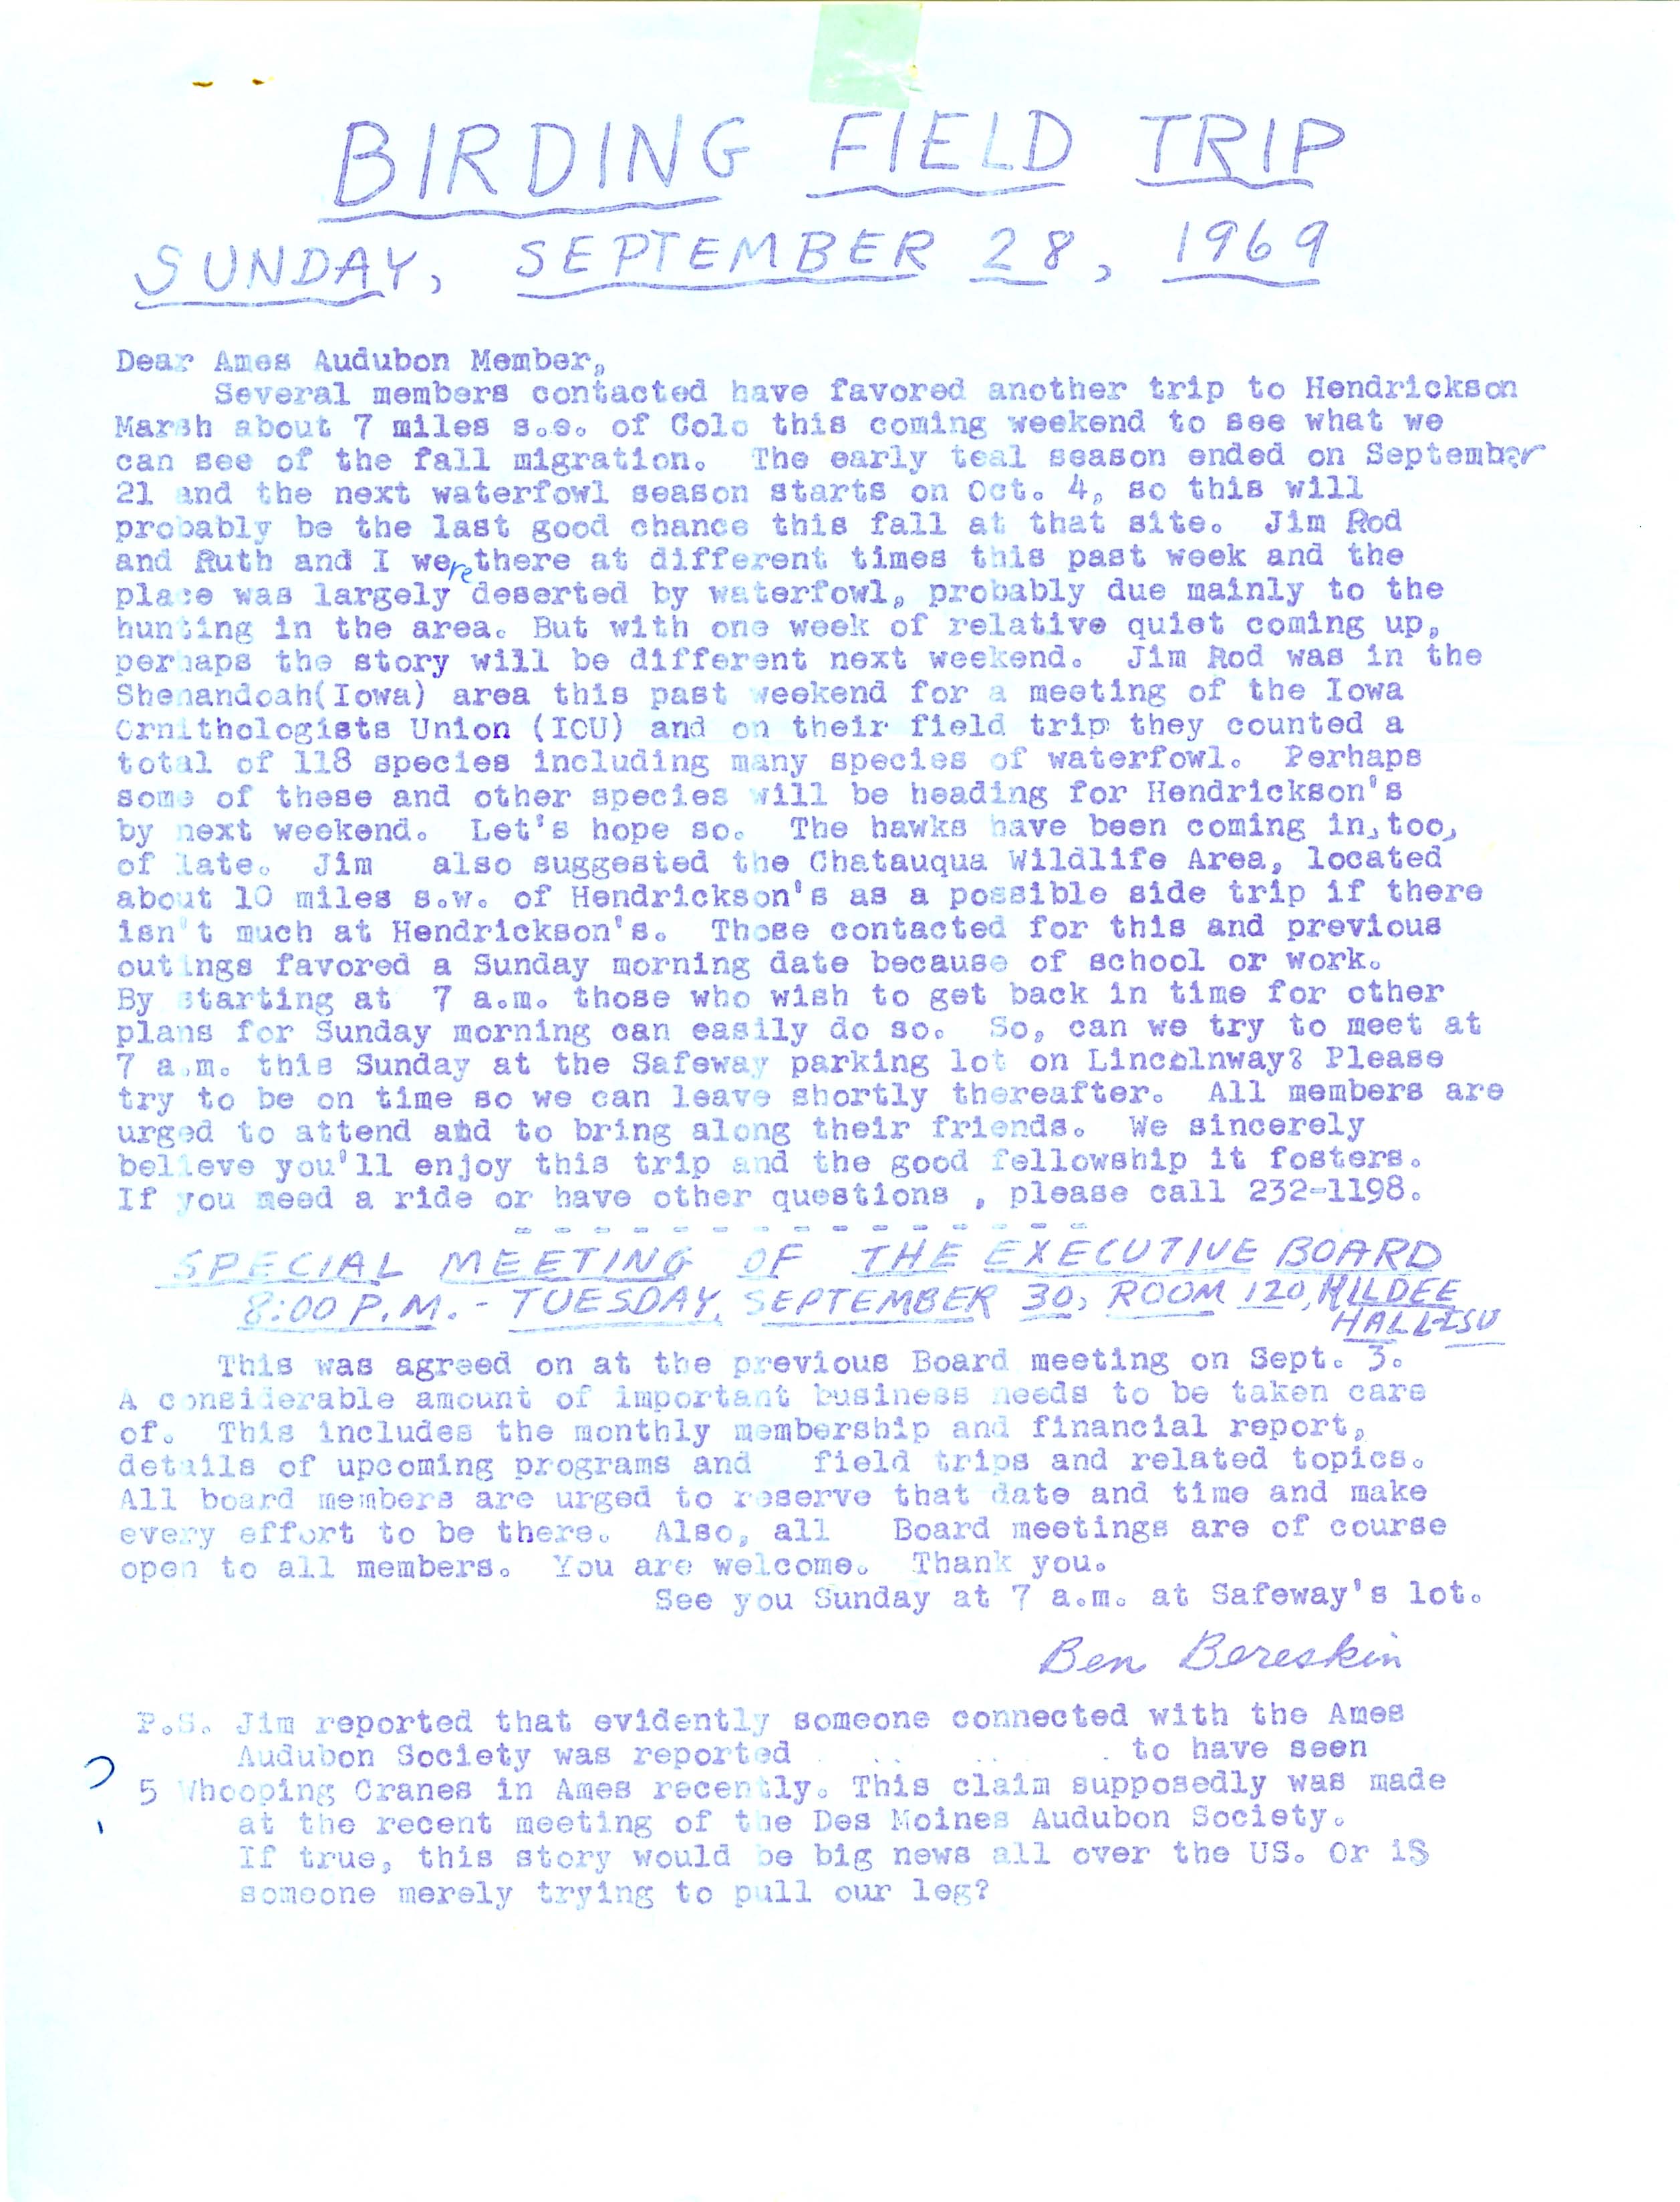 Ben Bereskin letter to Wilmer J. Miller and Lotus Miller regarding a birding field trip, September 22, 1969